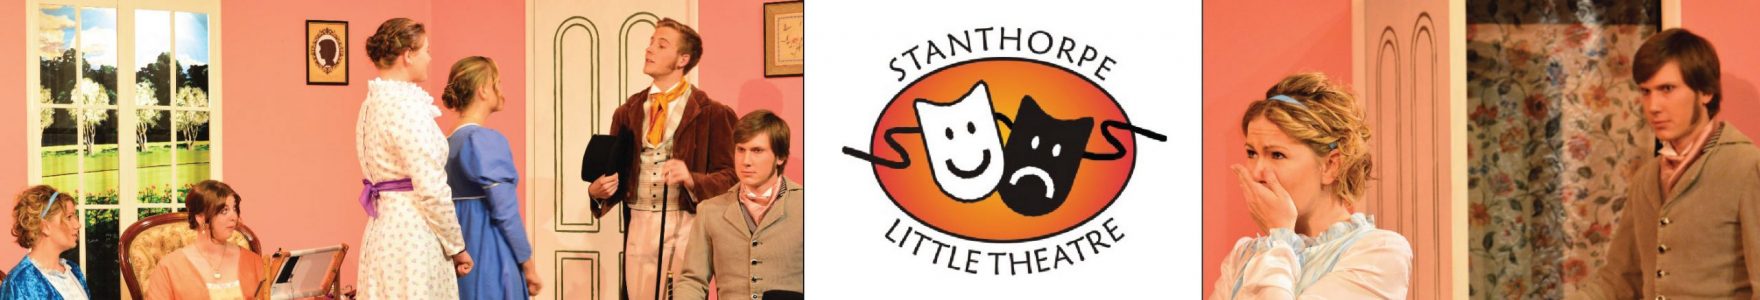 Stanthorpe Little Theatre